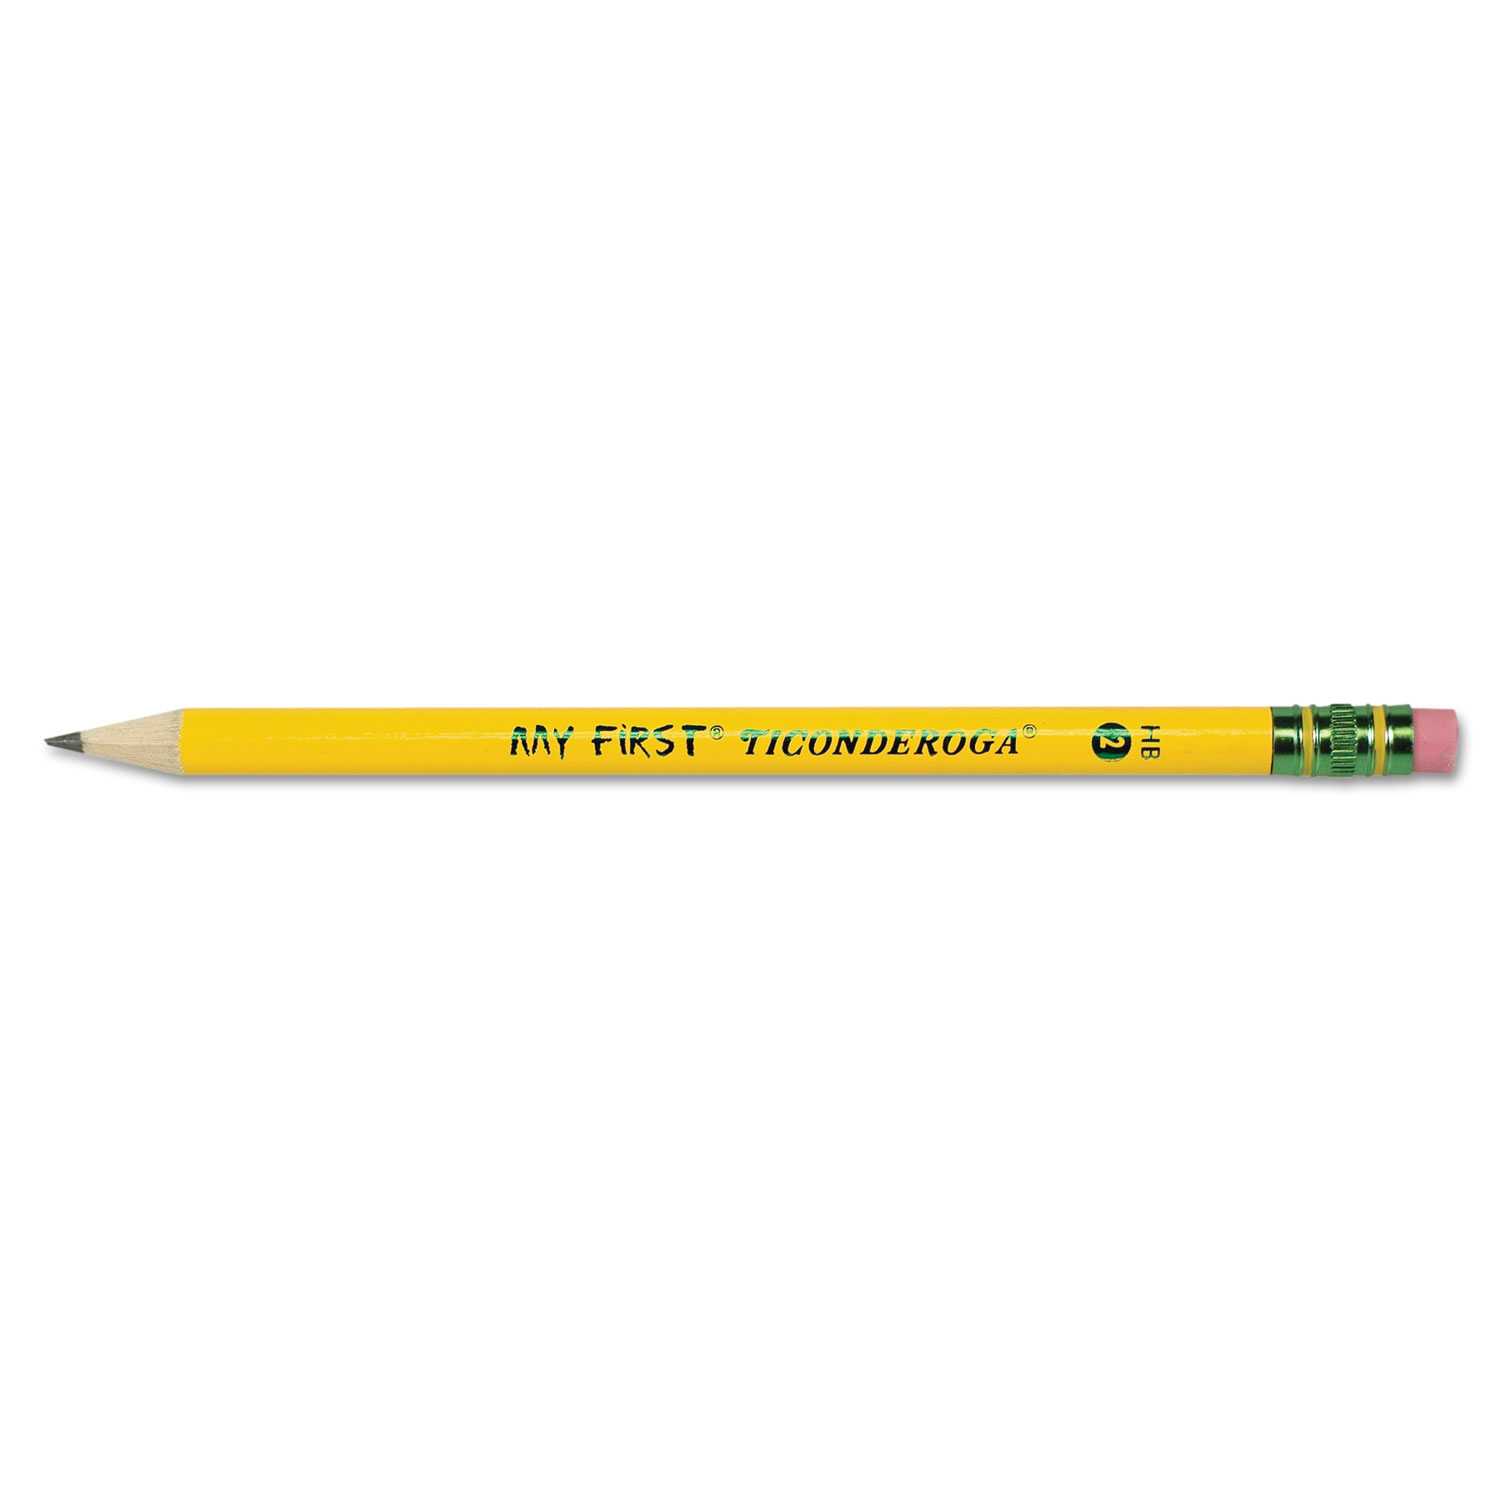 My Store Big pencil 001 Pencil 